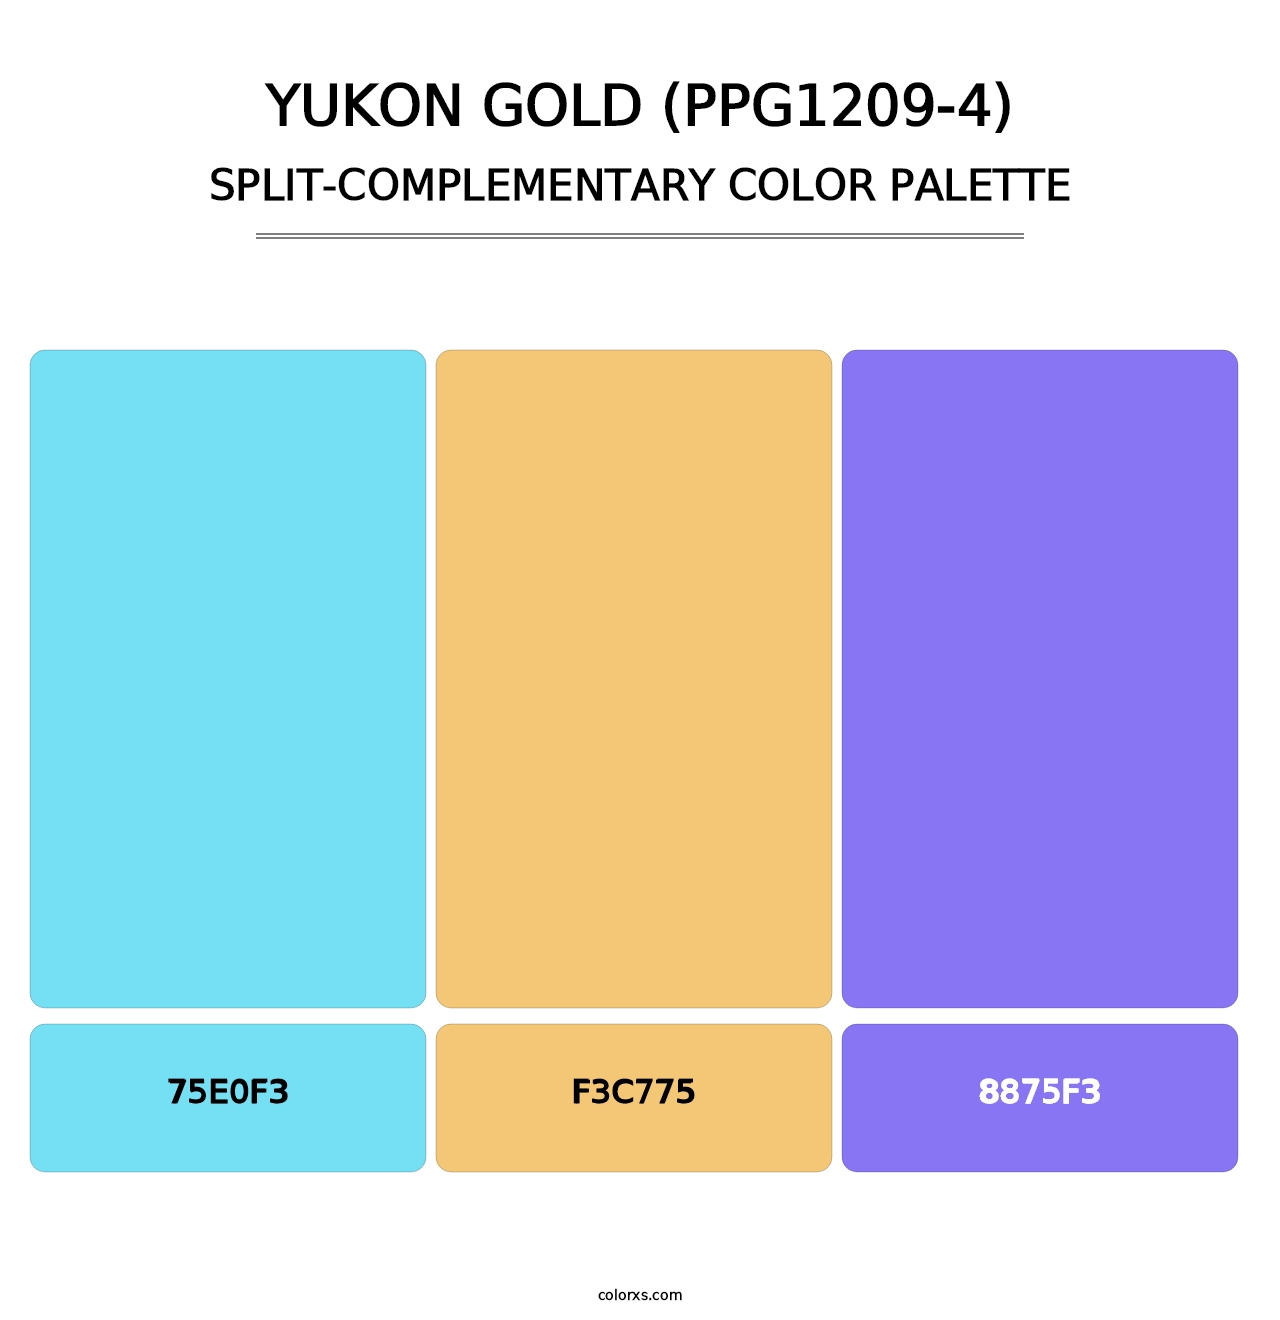 Yukon Gold (PPG1209-4) - Split-Complementary Color Palette